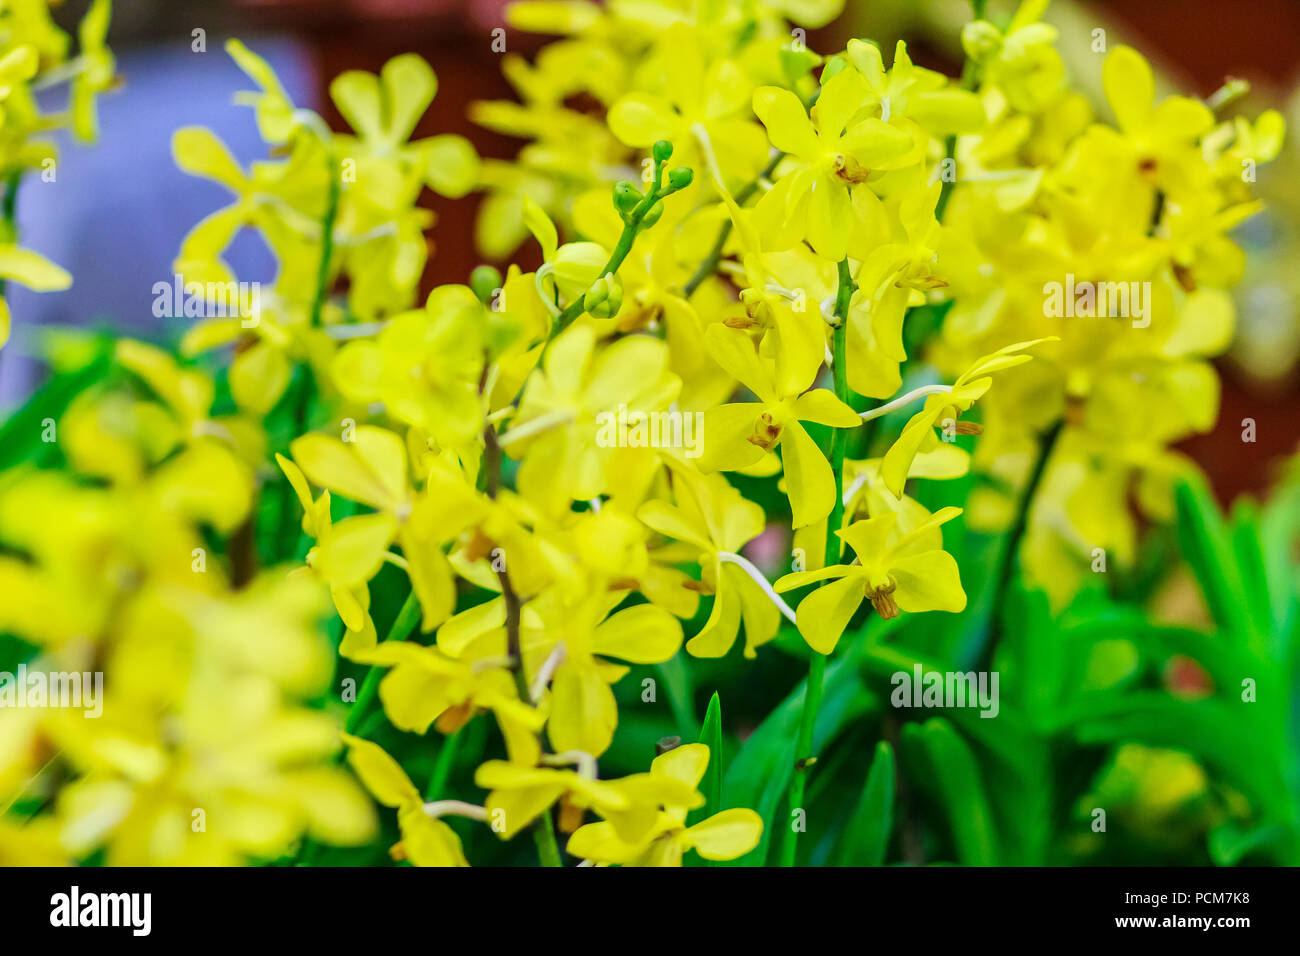 Yellow Ascocenda orchids flowers decorated at Suvarnabhumi airport, Bangkok, Thailand. Petal yellow ascocenda orchid flowers in night shot with grain. Stock Photo